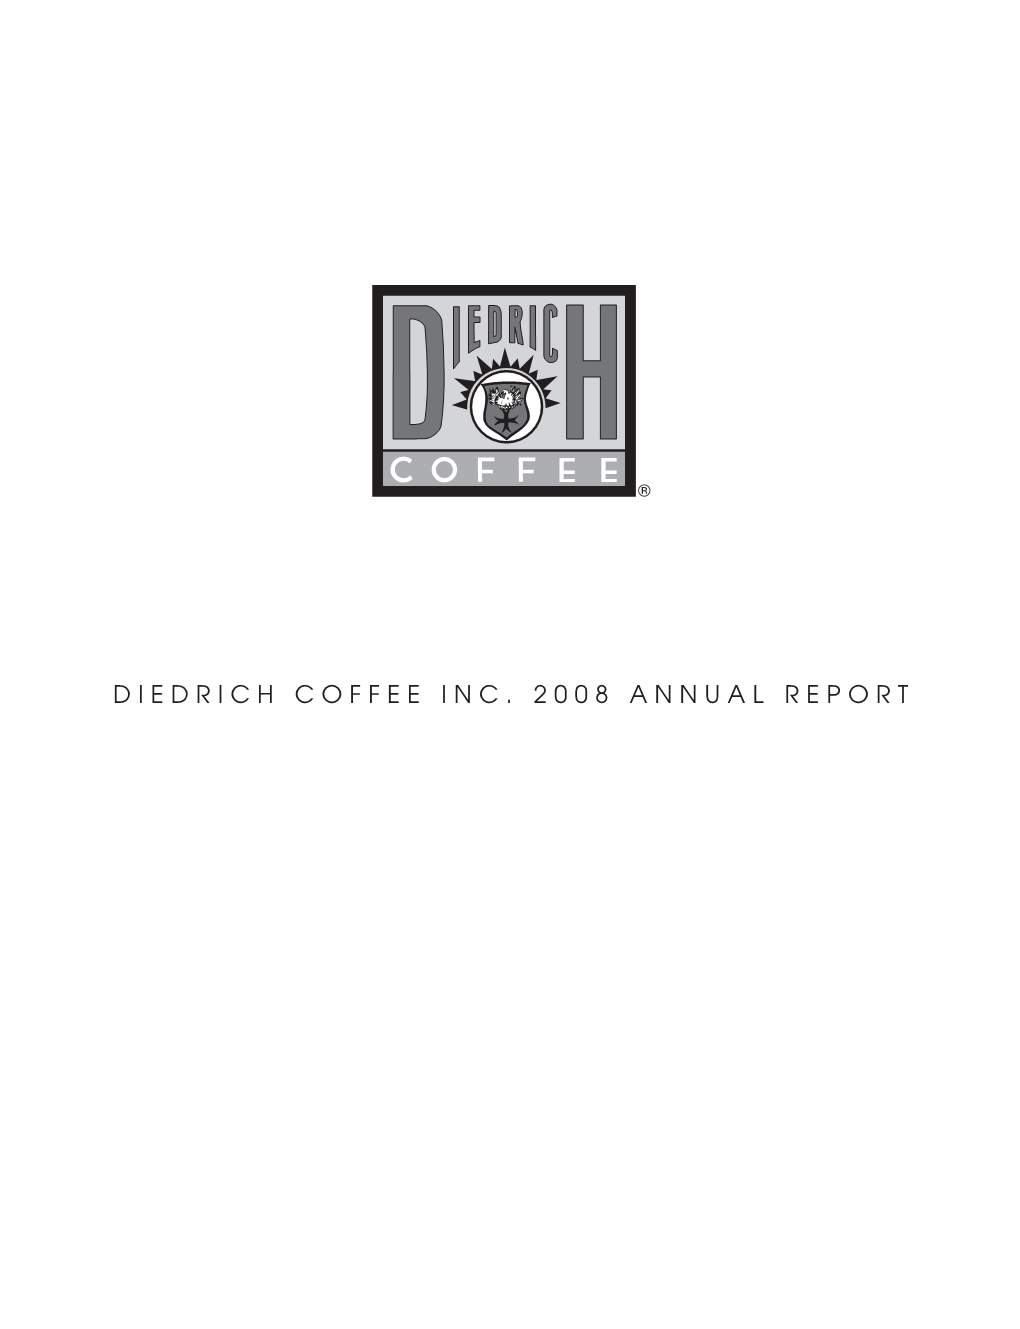 Diedrich Coffee Inc. 2008 Annual Report